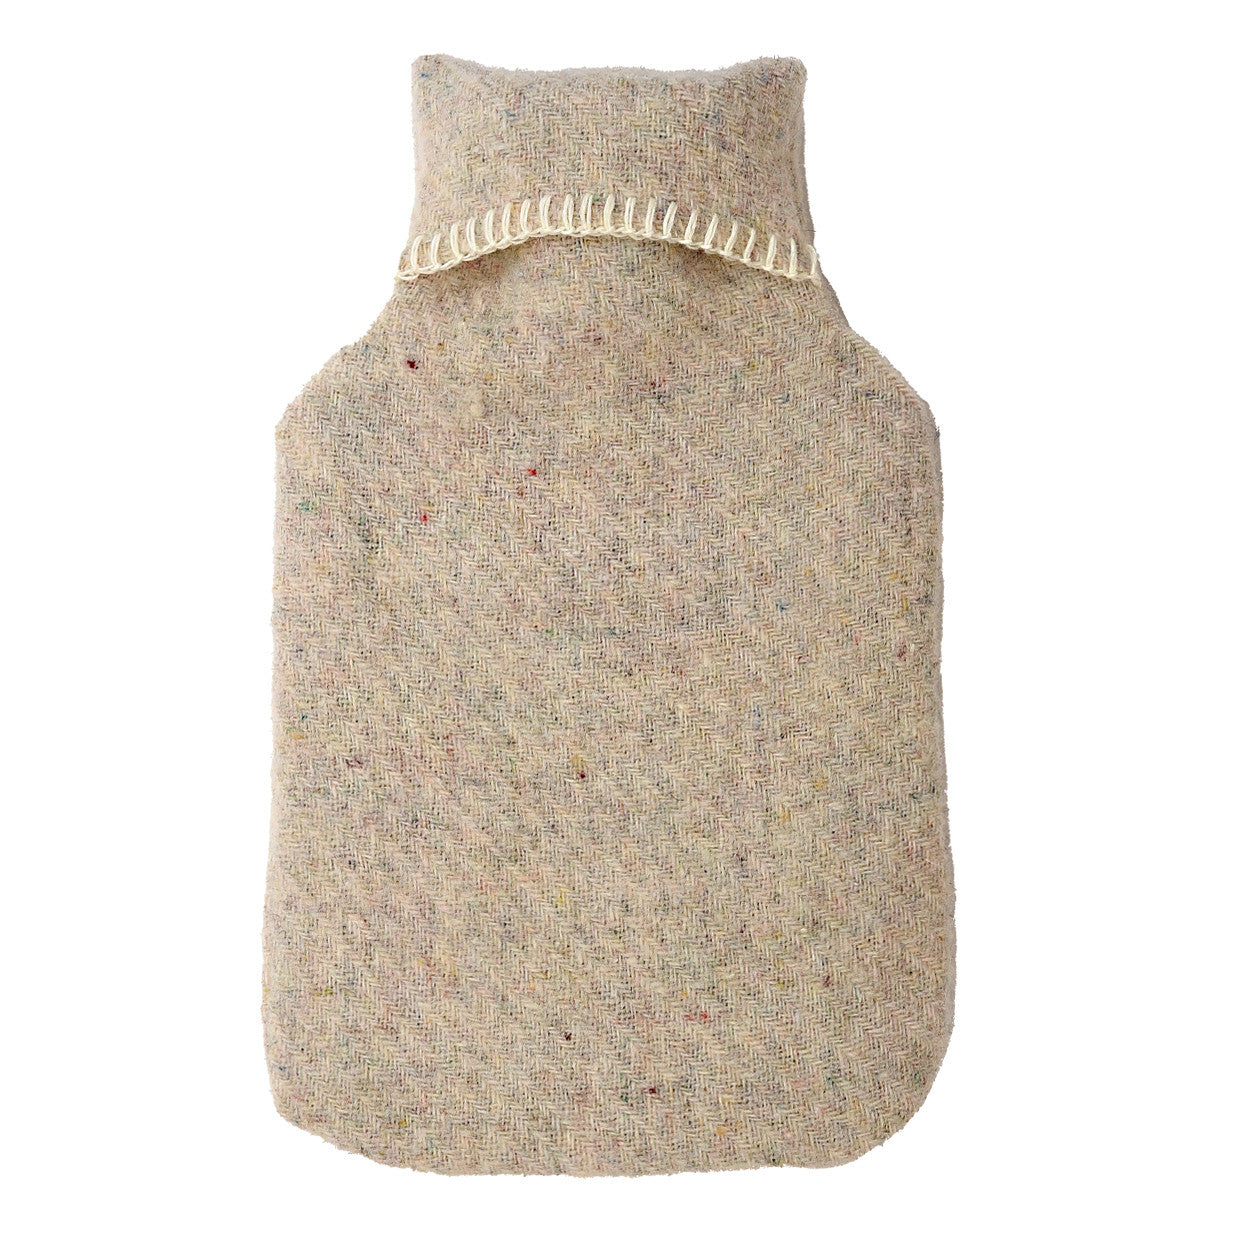 Recycled Wool Hot Water Bottle in Diagonal Stripe Latte by Tweedmill